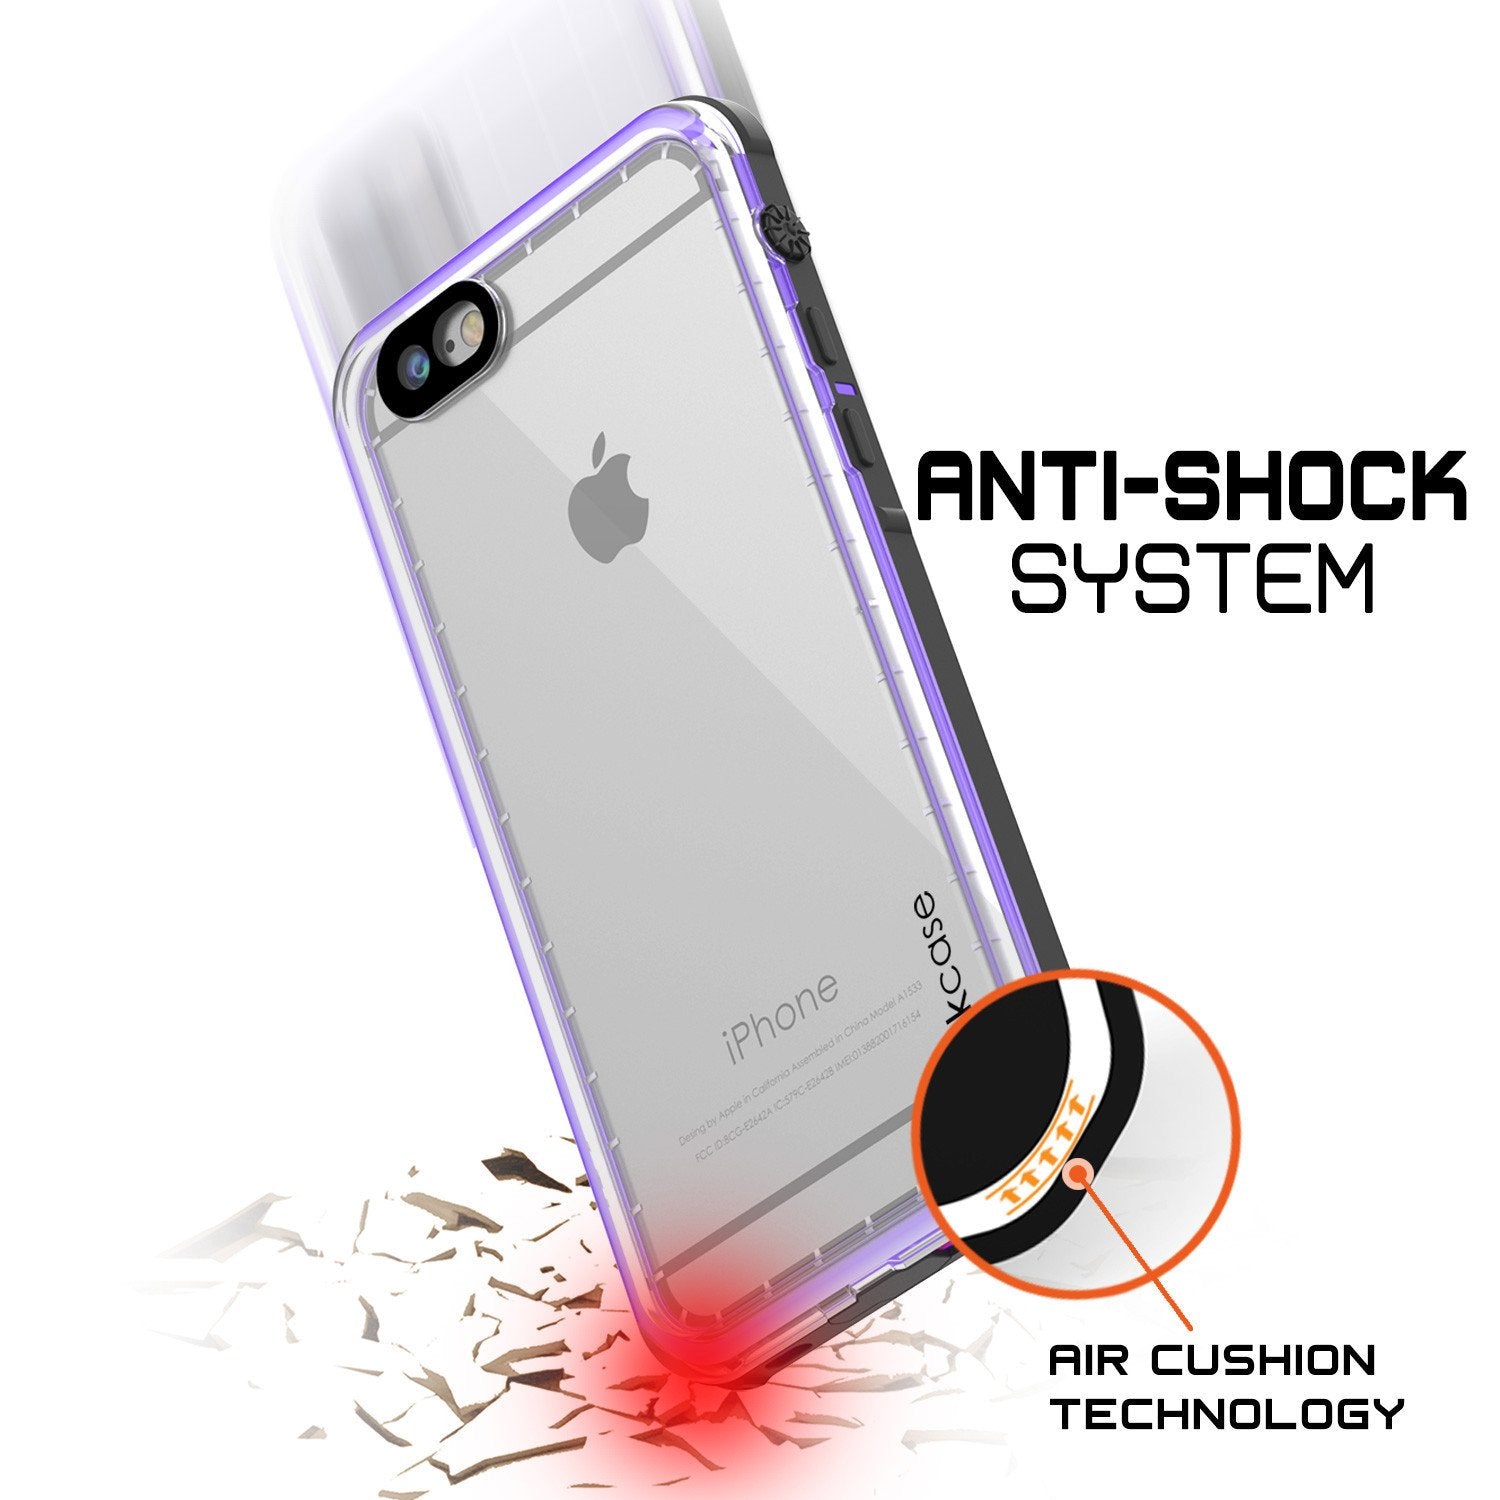 Apple iPhone 7 Waterproof Case, PUNKcase CRYSTAL Purple W/ Attached Screen Protector  | Warranty